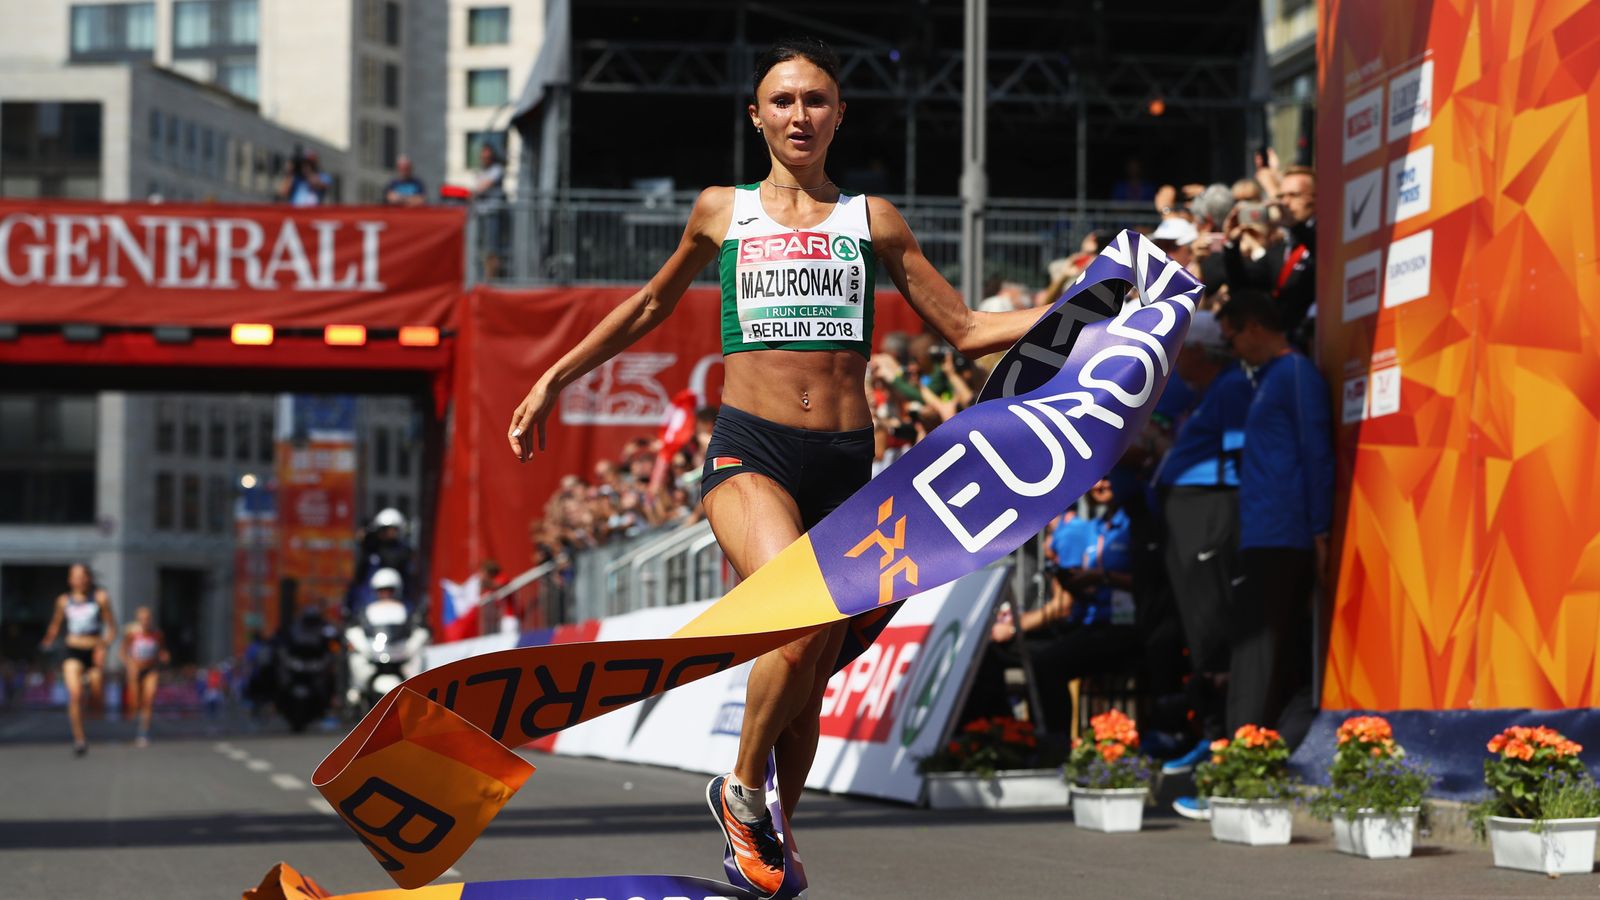 Volha Mazuronak wins marathon despite nose bleed Athletics News Sky Sports